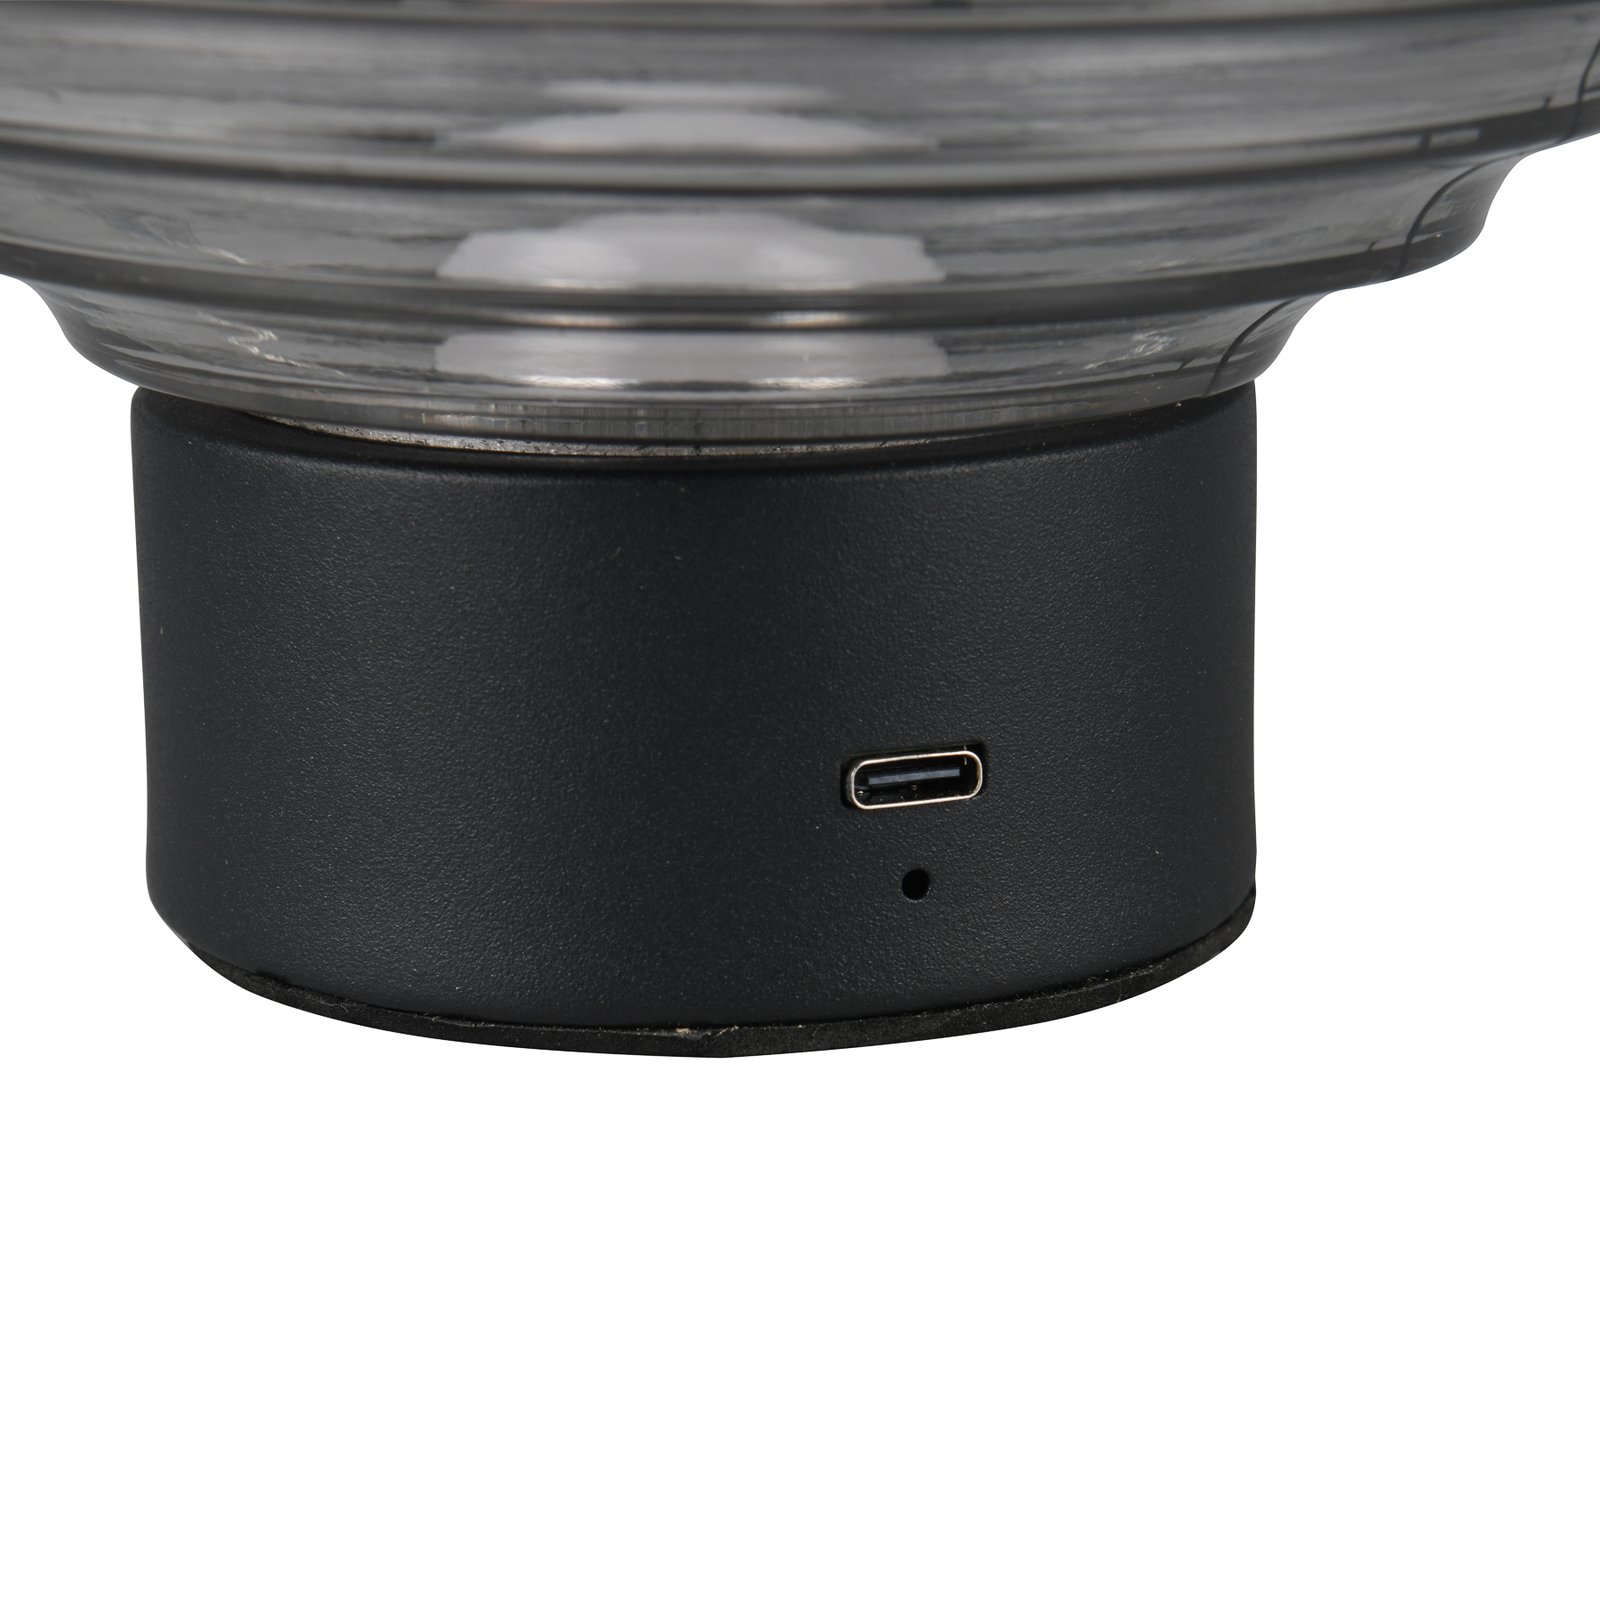 Earl LED tafellamp, zwart/rook, hoogte 14,5 cm, glas